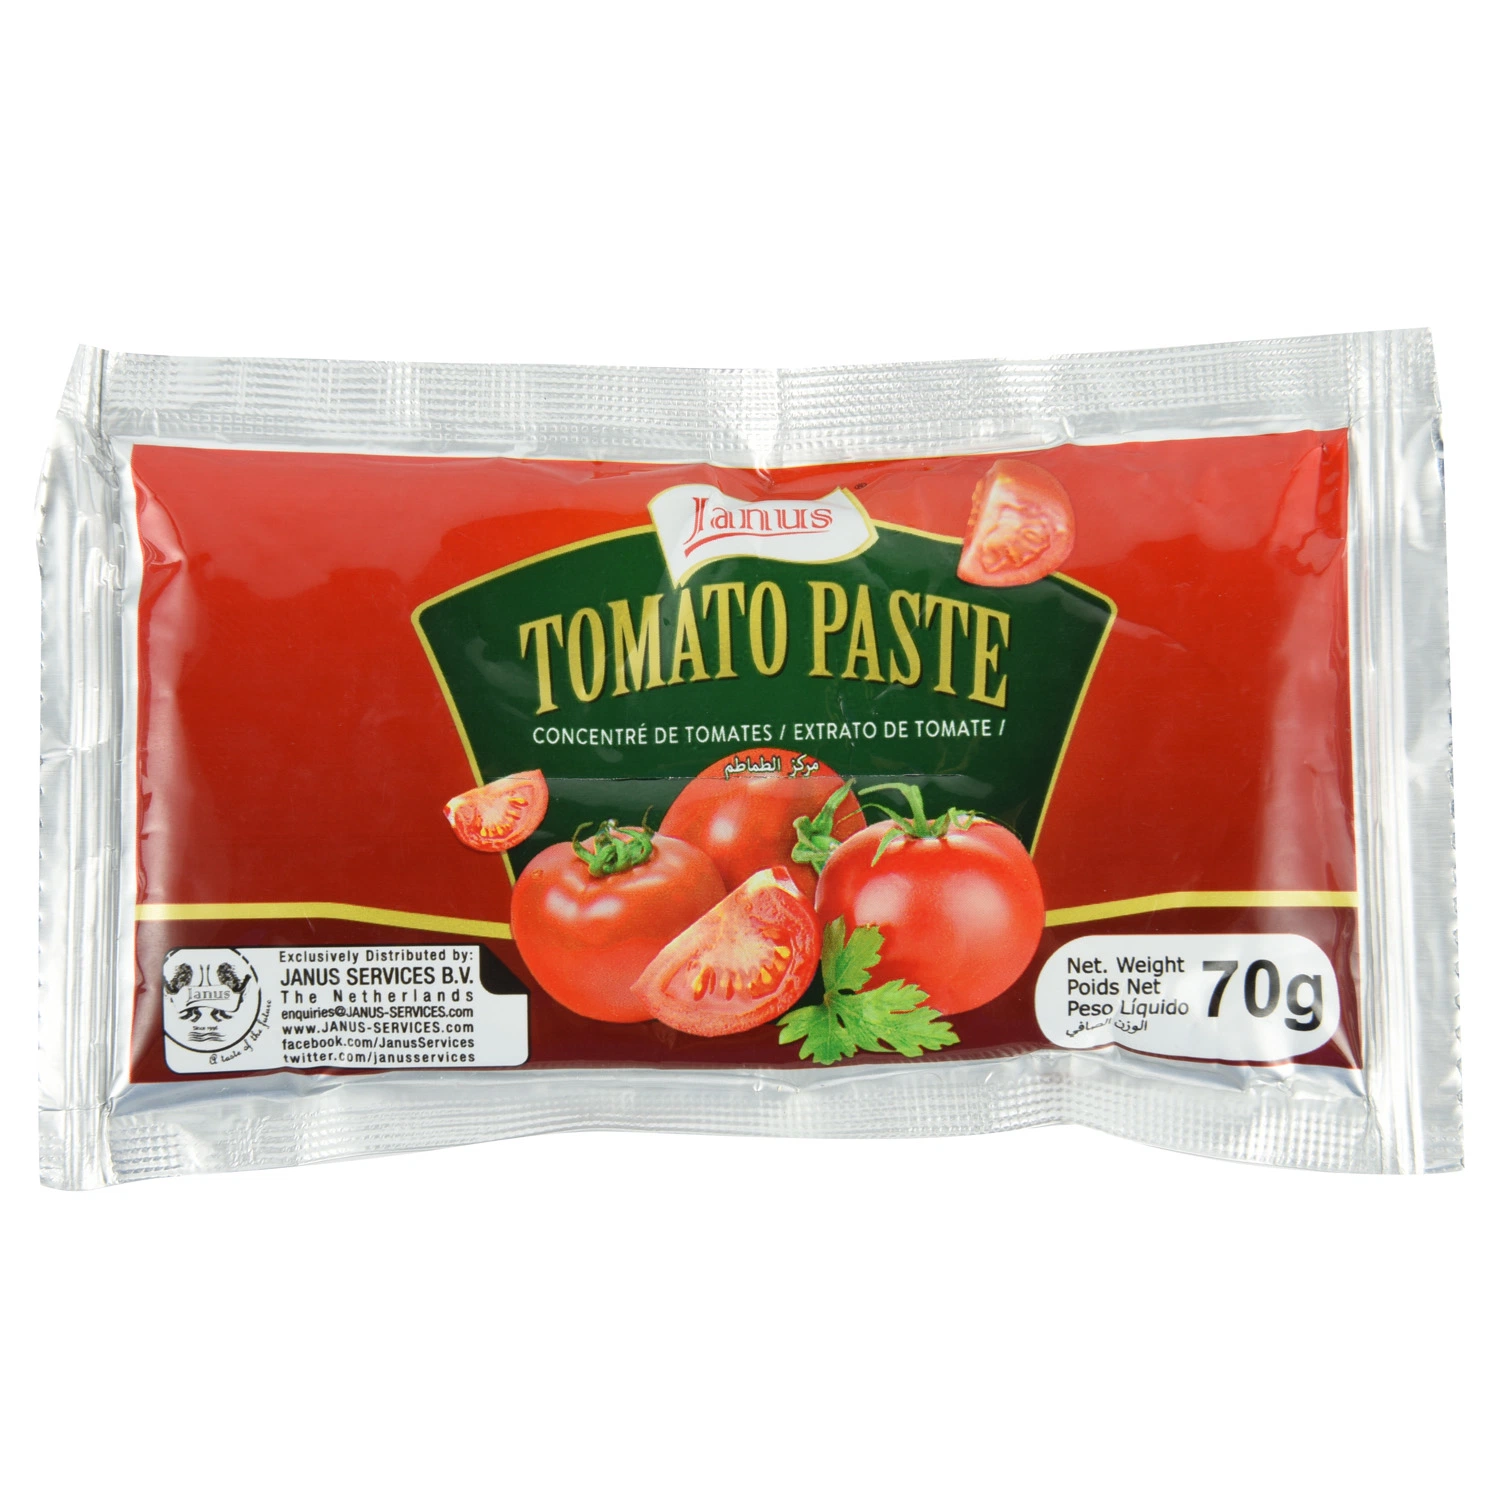 Mais vendido Agricultura Verde alimentos sem aditivos delicioso personalizado Duplo Concentrado pasta de tomate enlatada 210g para África